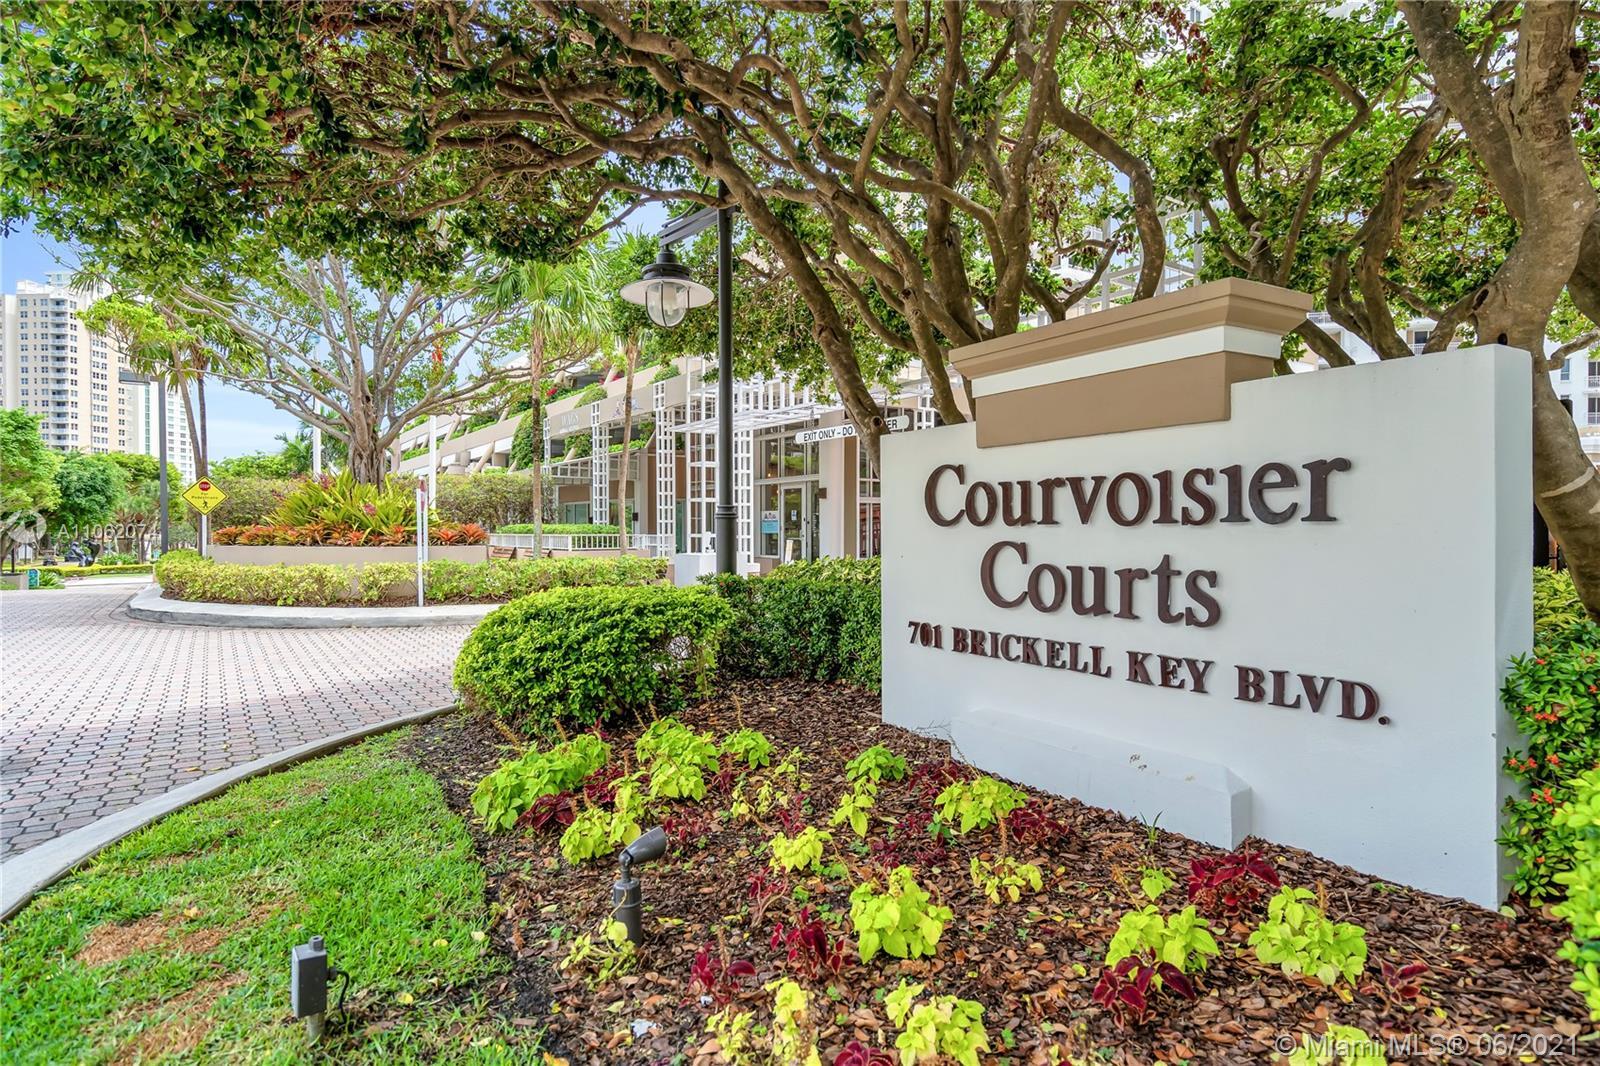 Courvoisier Courts - Condos for sale